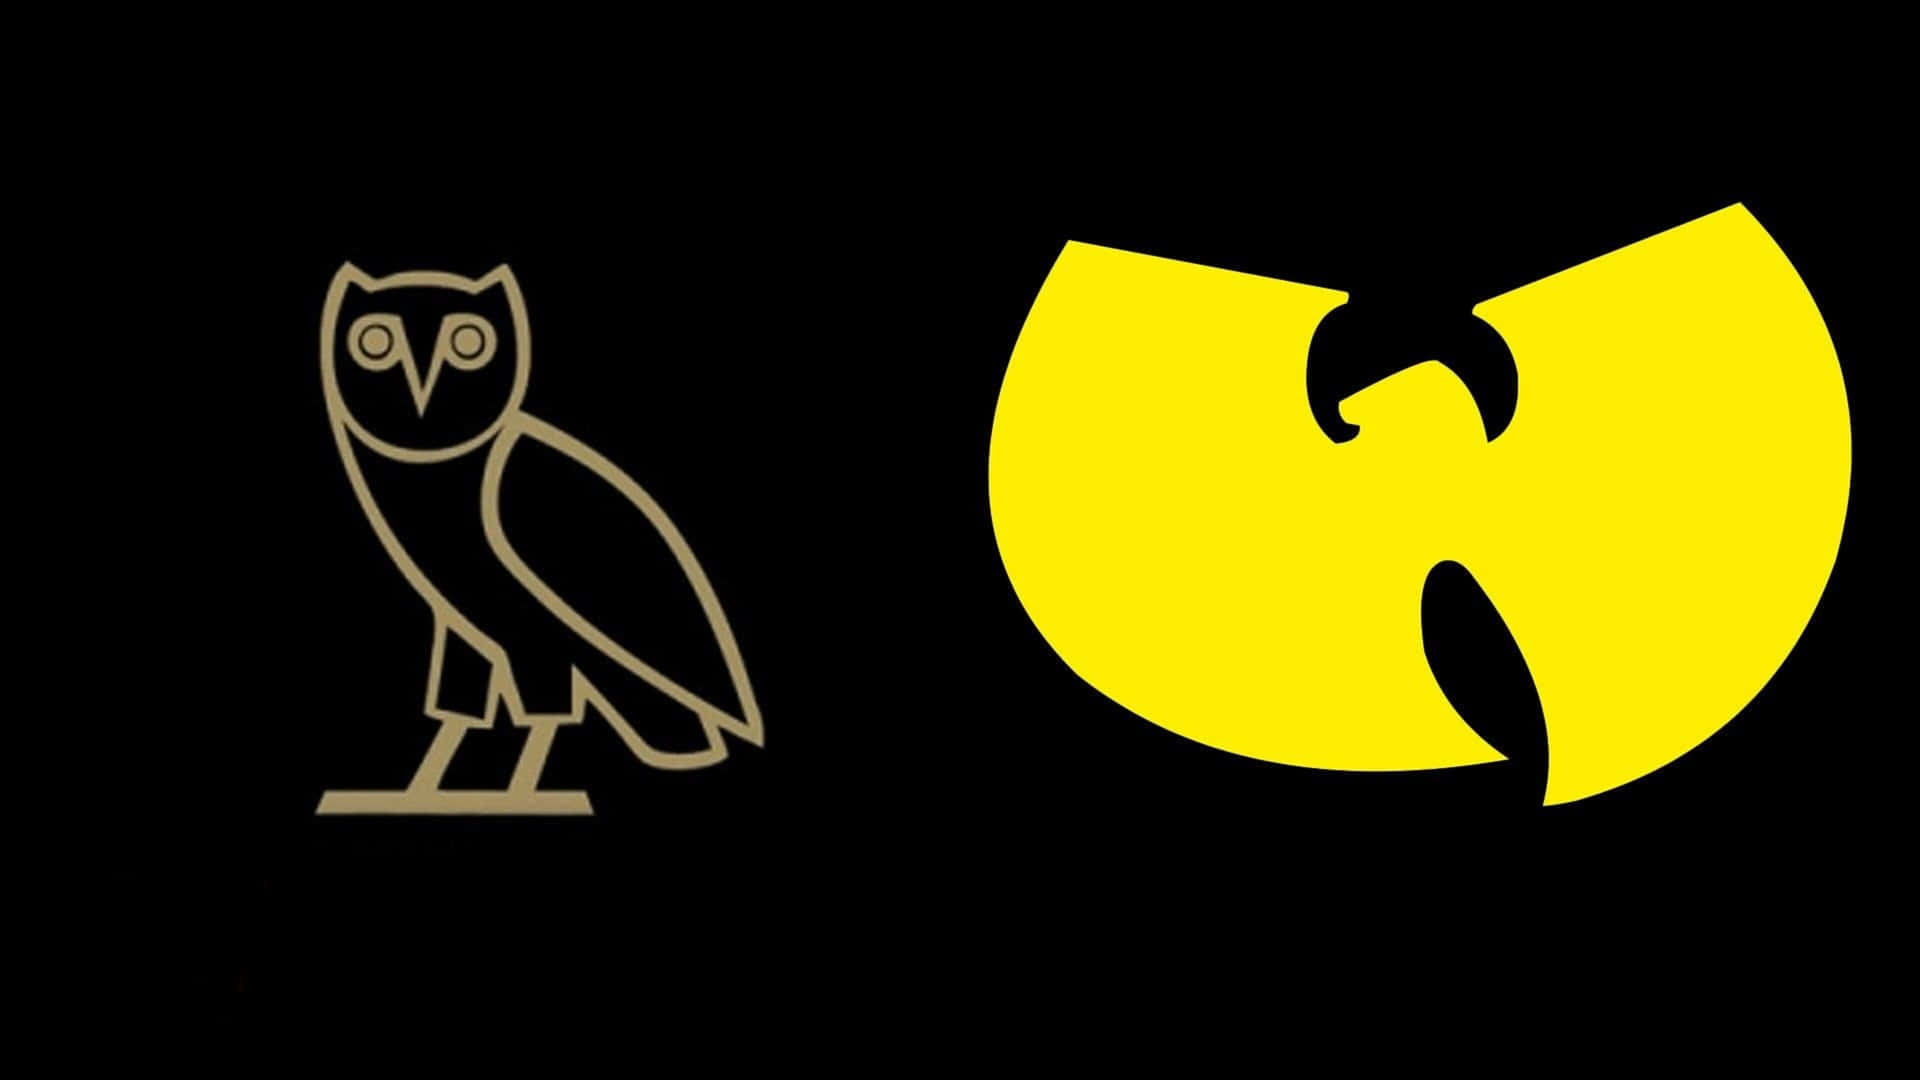 Wu Tang Clan Logo And An Owl 4K Wallpaper